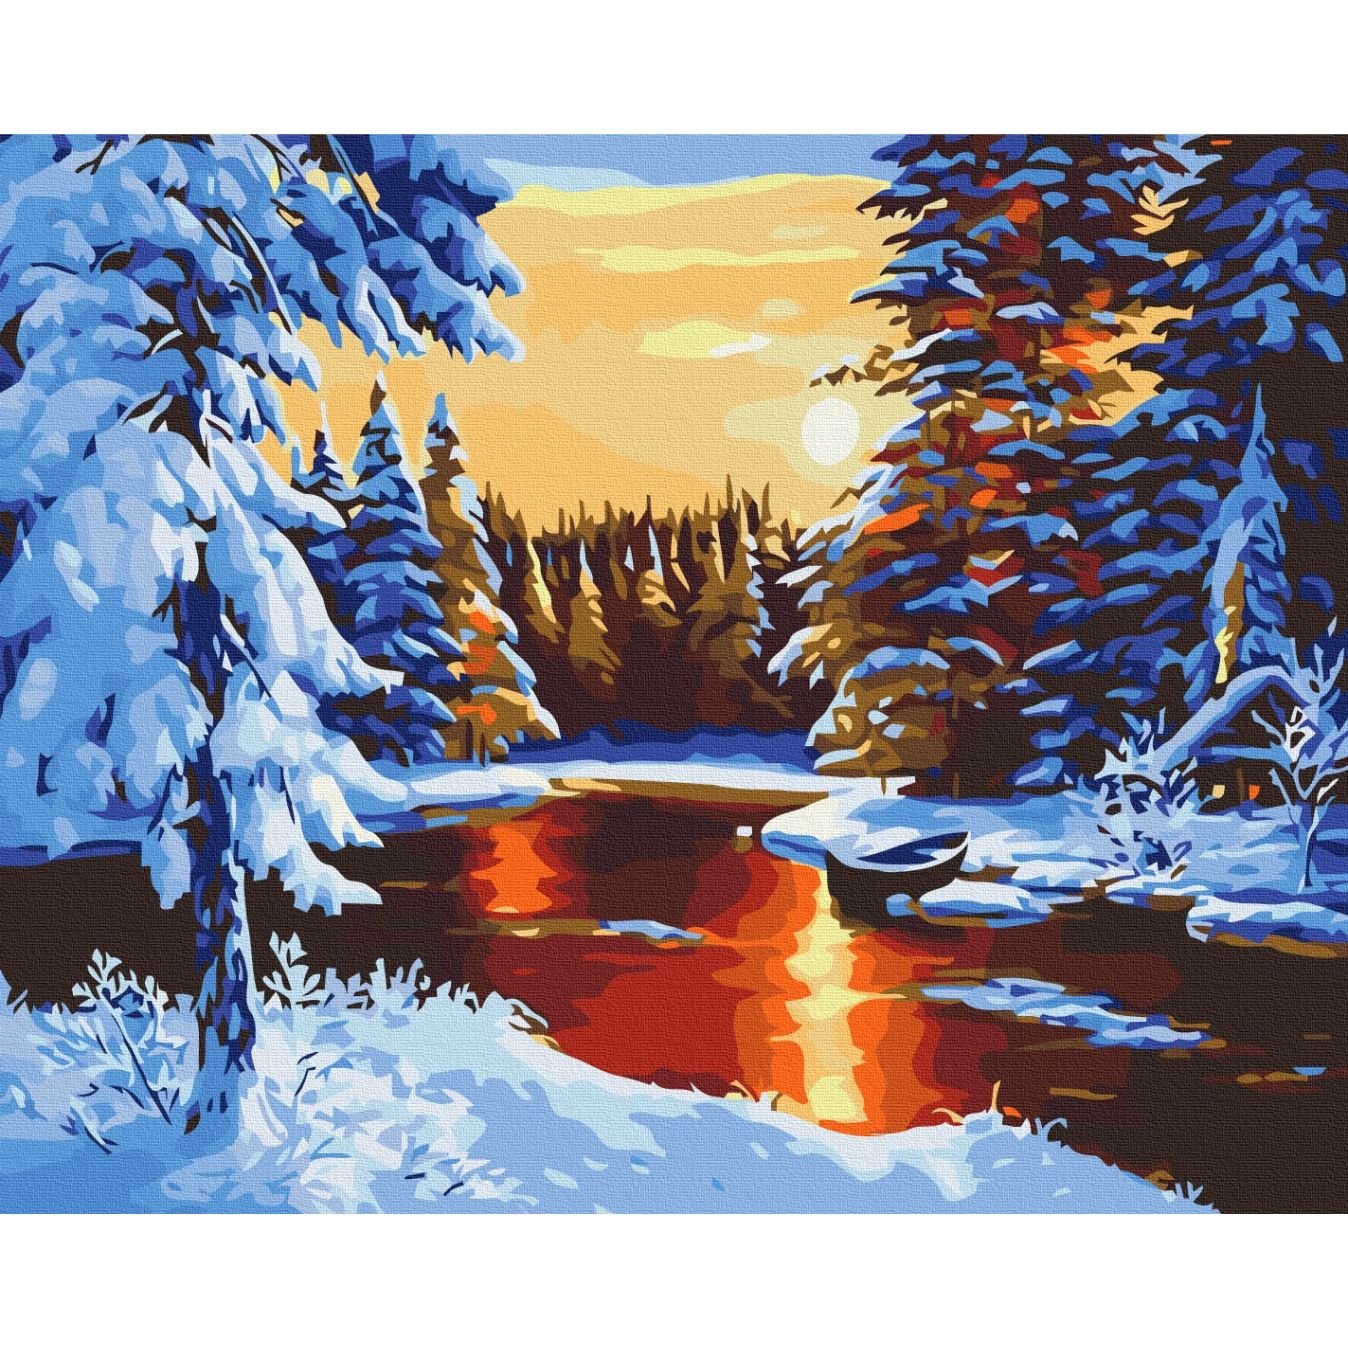 Картина по номерам Сказочная зима Brushme 40x50 см разноцветная 000276616 - фото 1